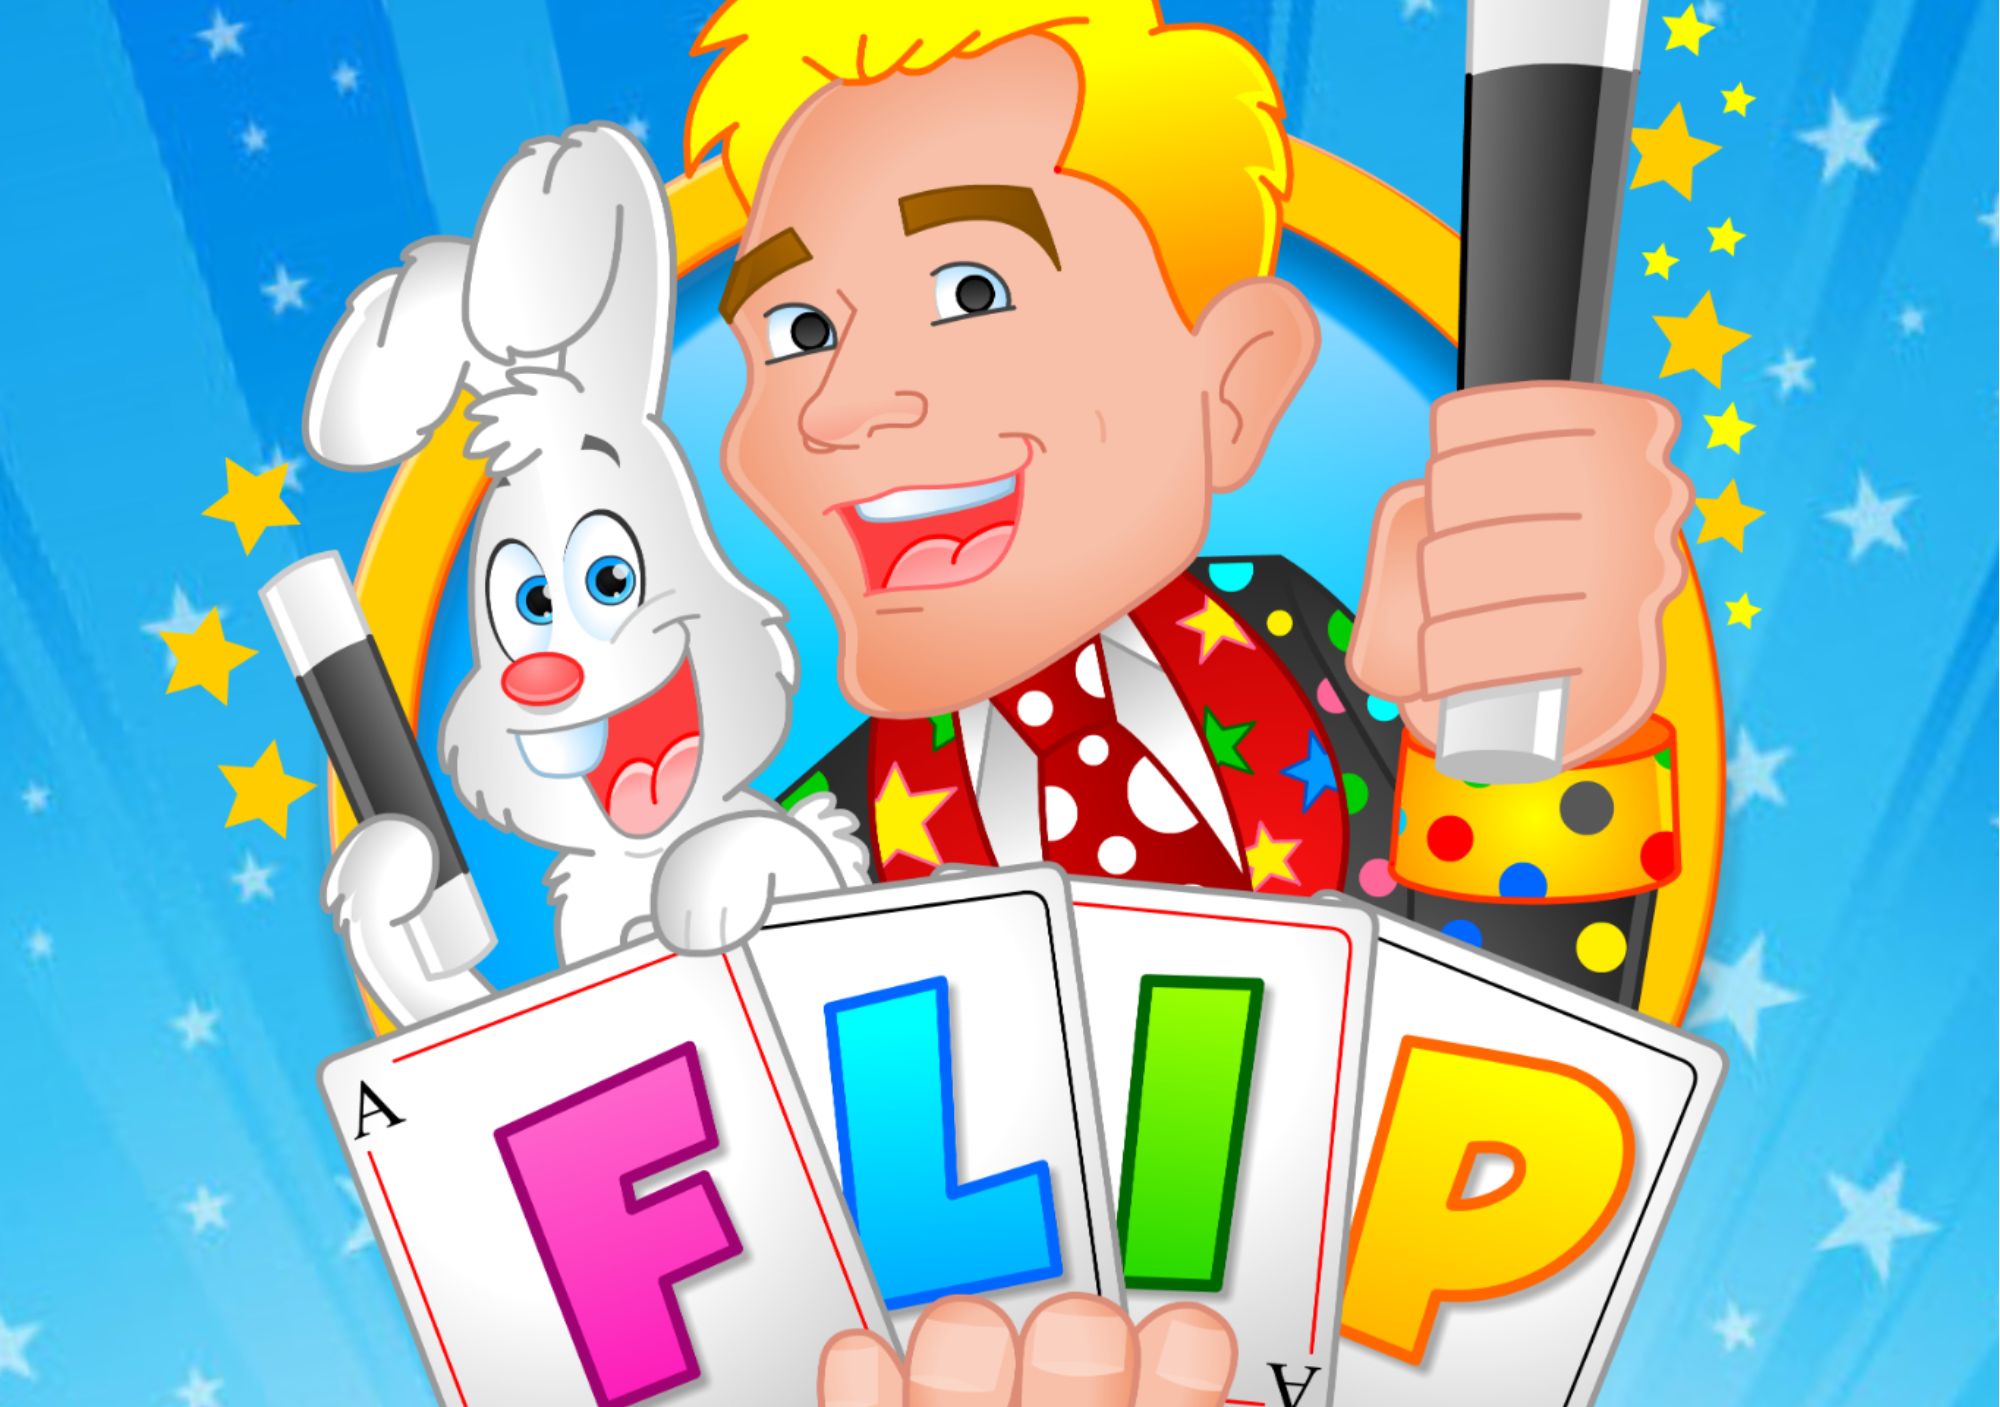 FLIP magic show